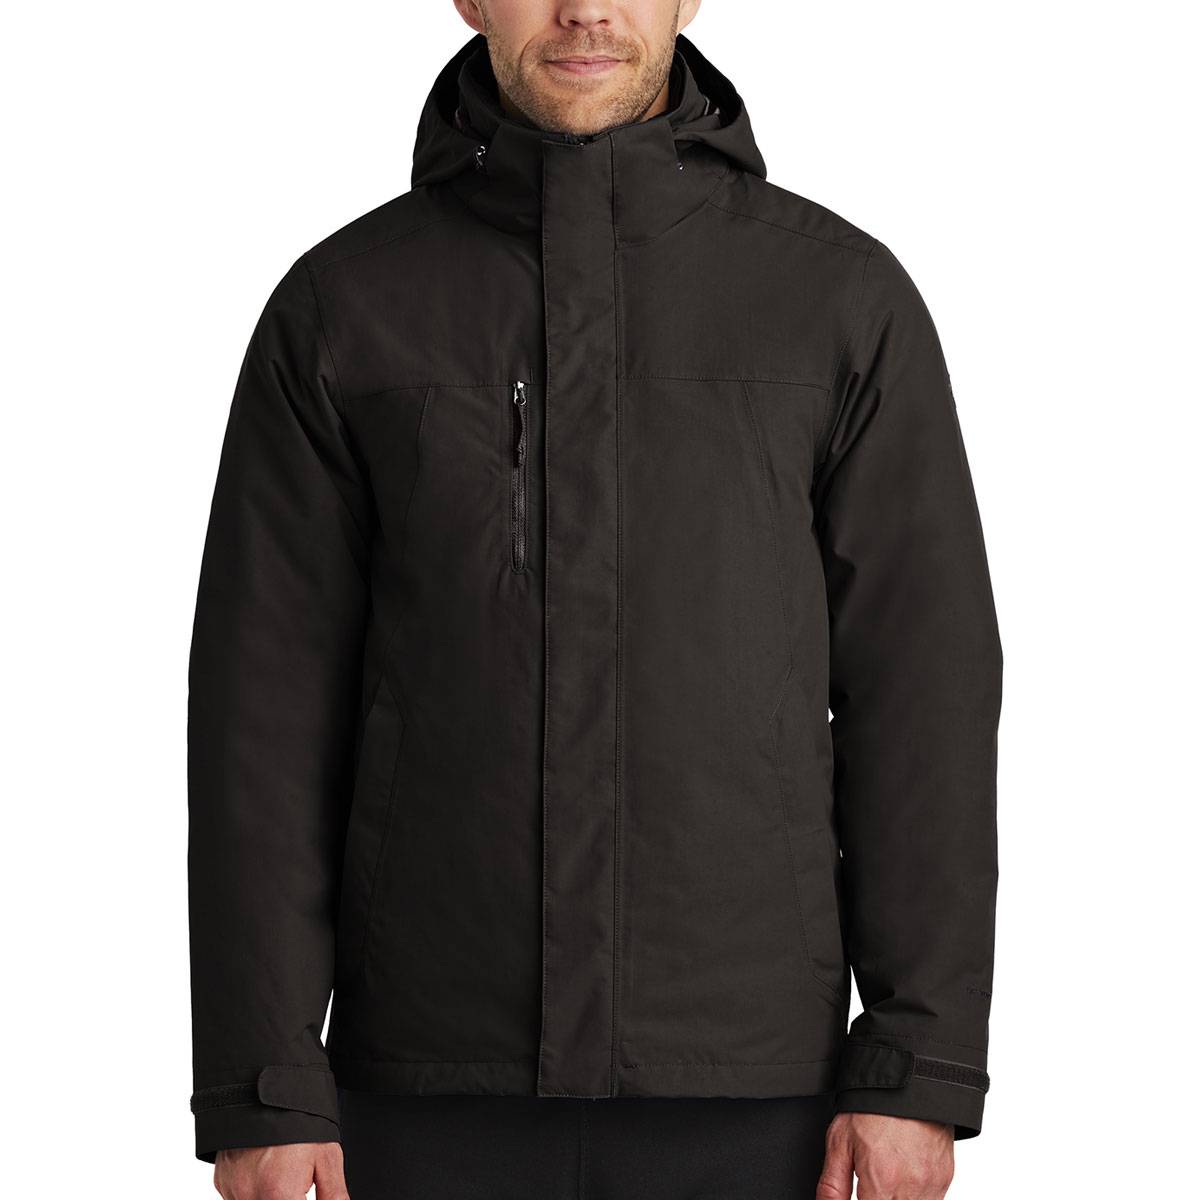 Apparel & Accessories :: Jackets & Vests :: North Face Traverse ...